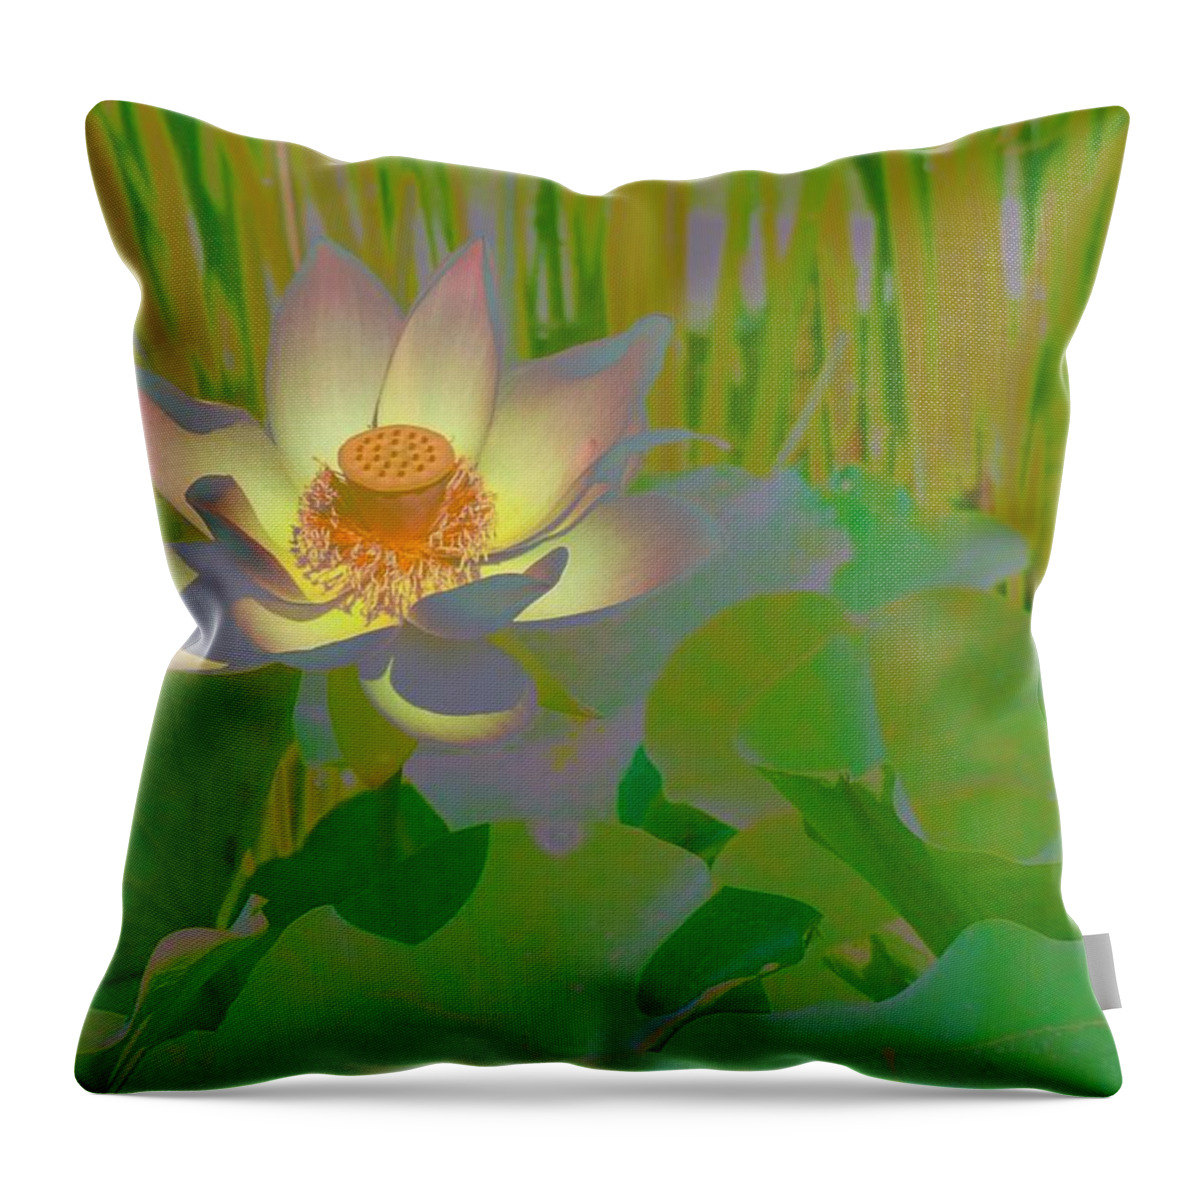 Lotus Throw Pillow featuring the digital art Lotus Light by Tg Devore